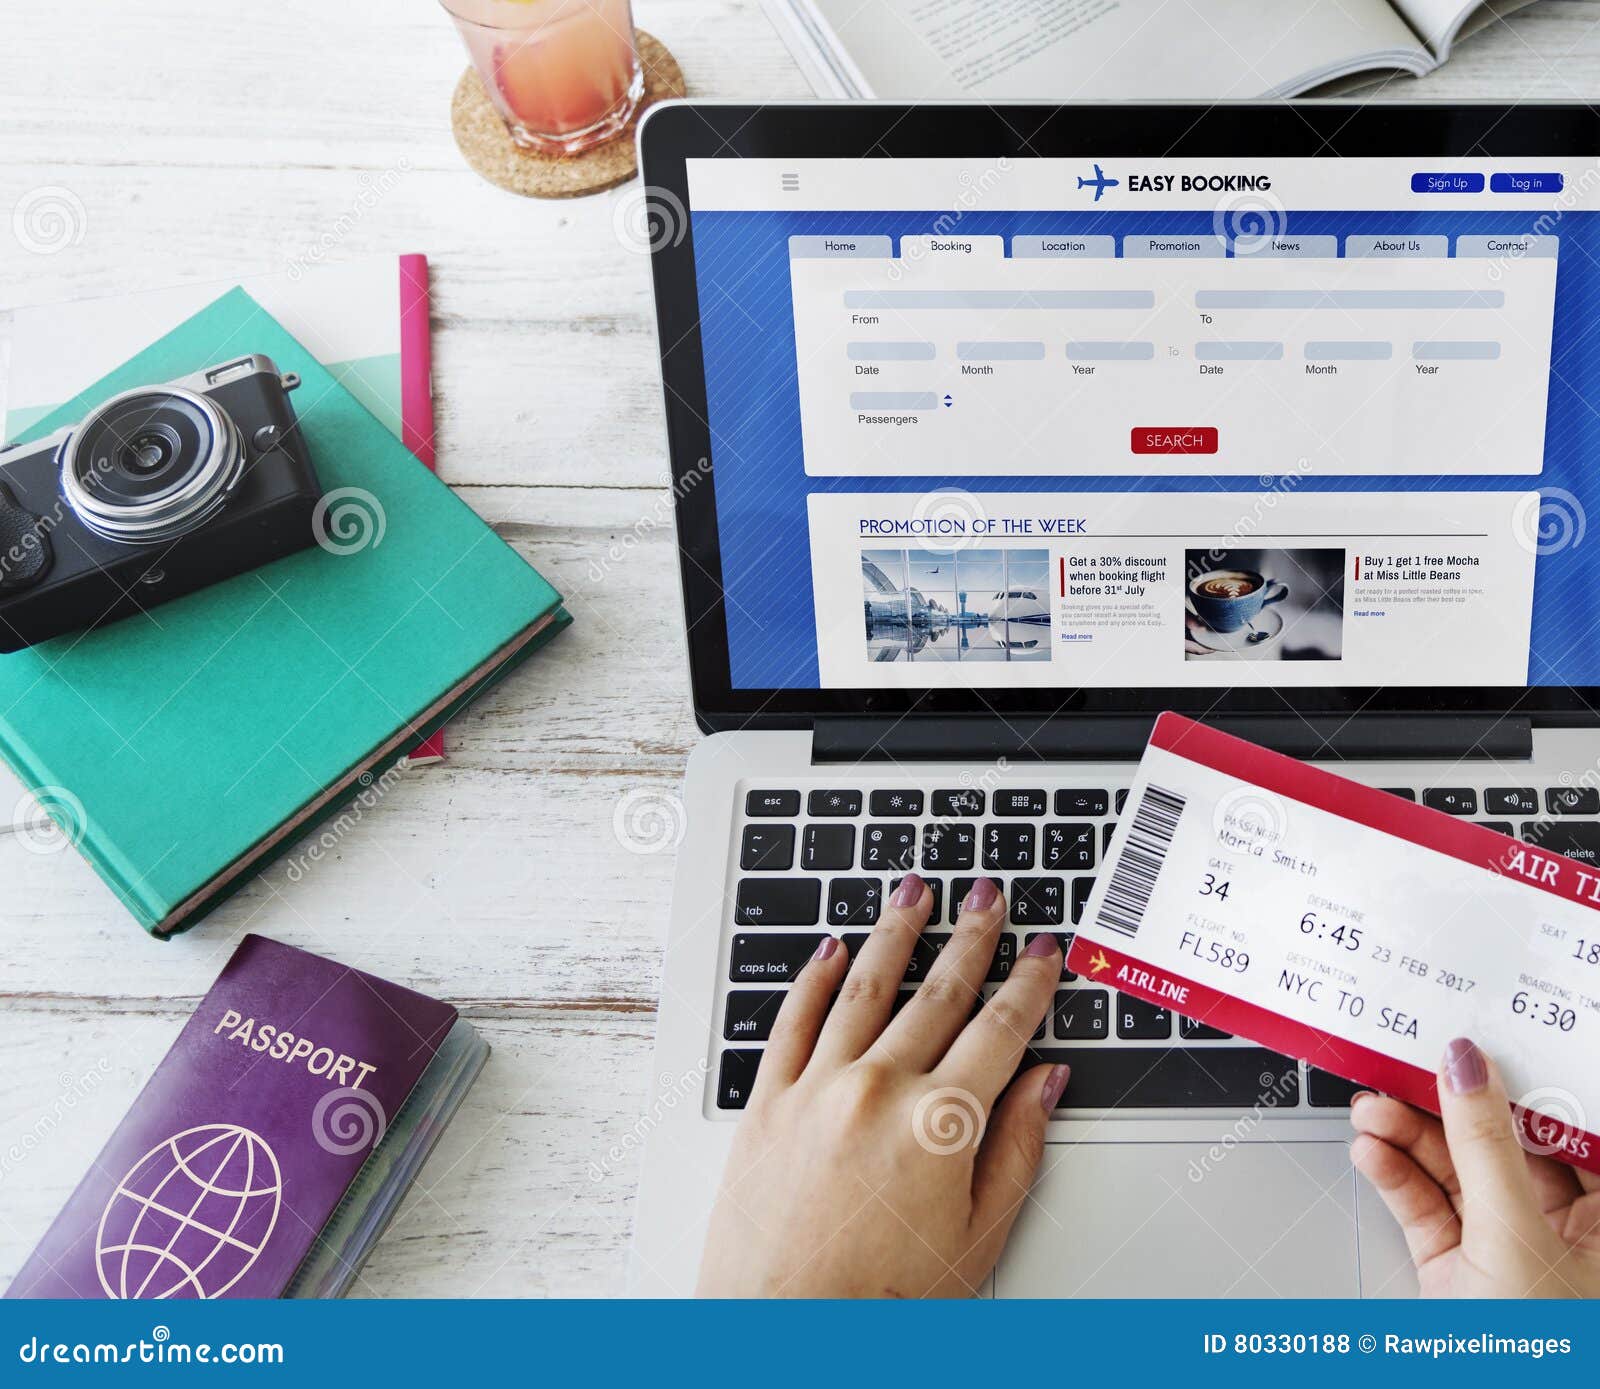 Ticket Booking Online Flight Travel Concept Stock Photo